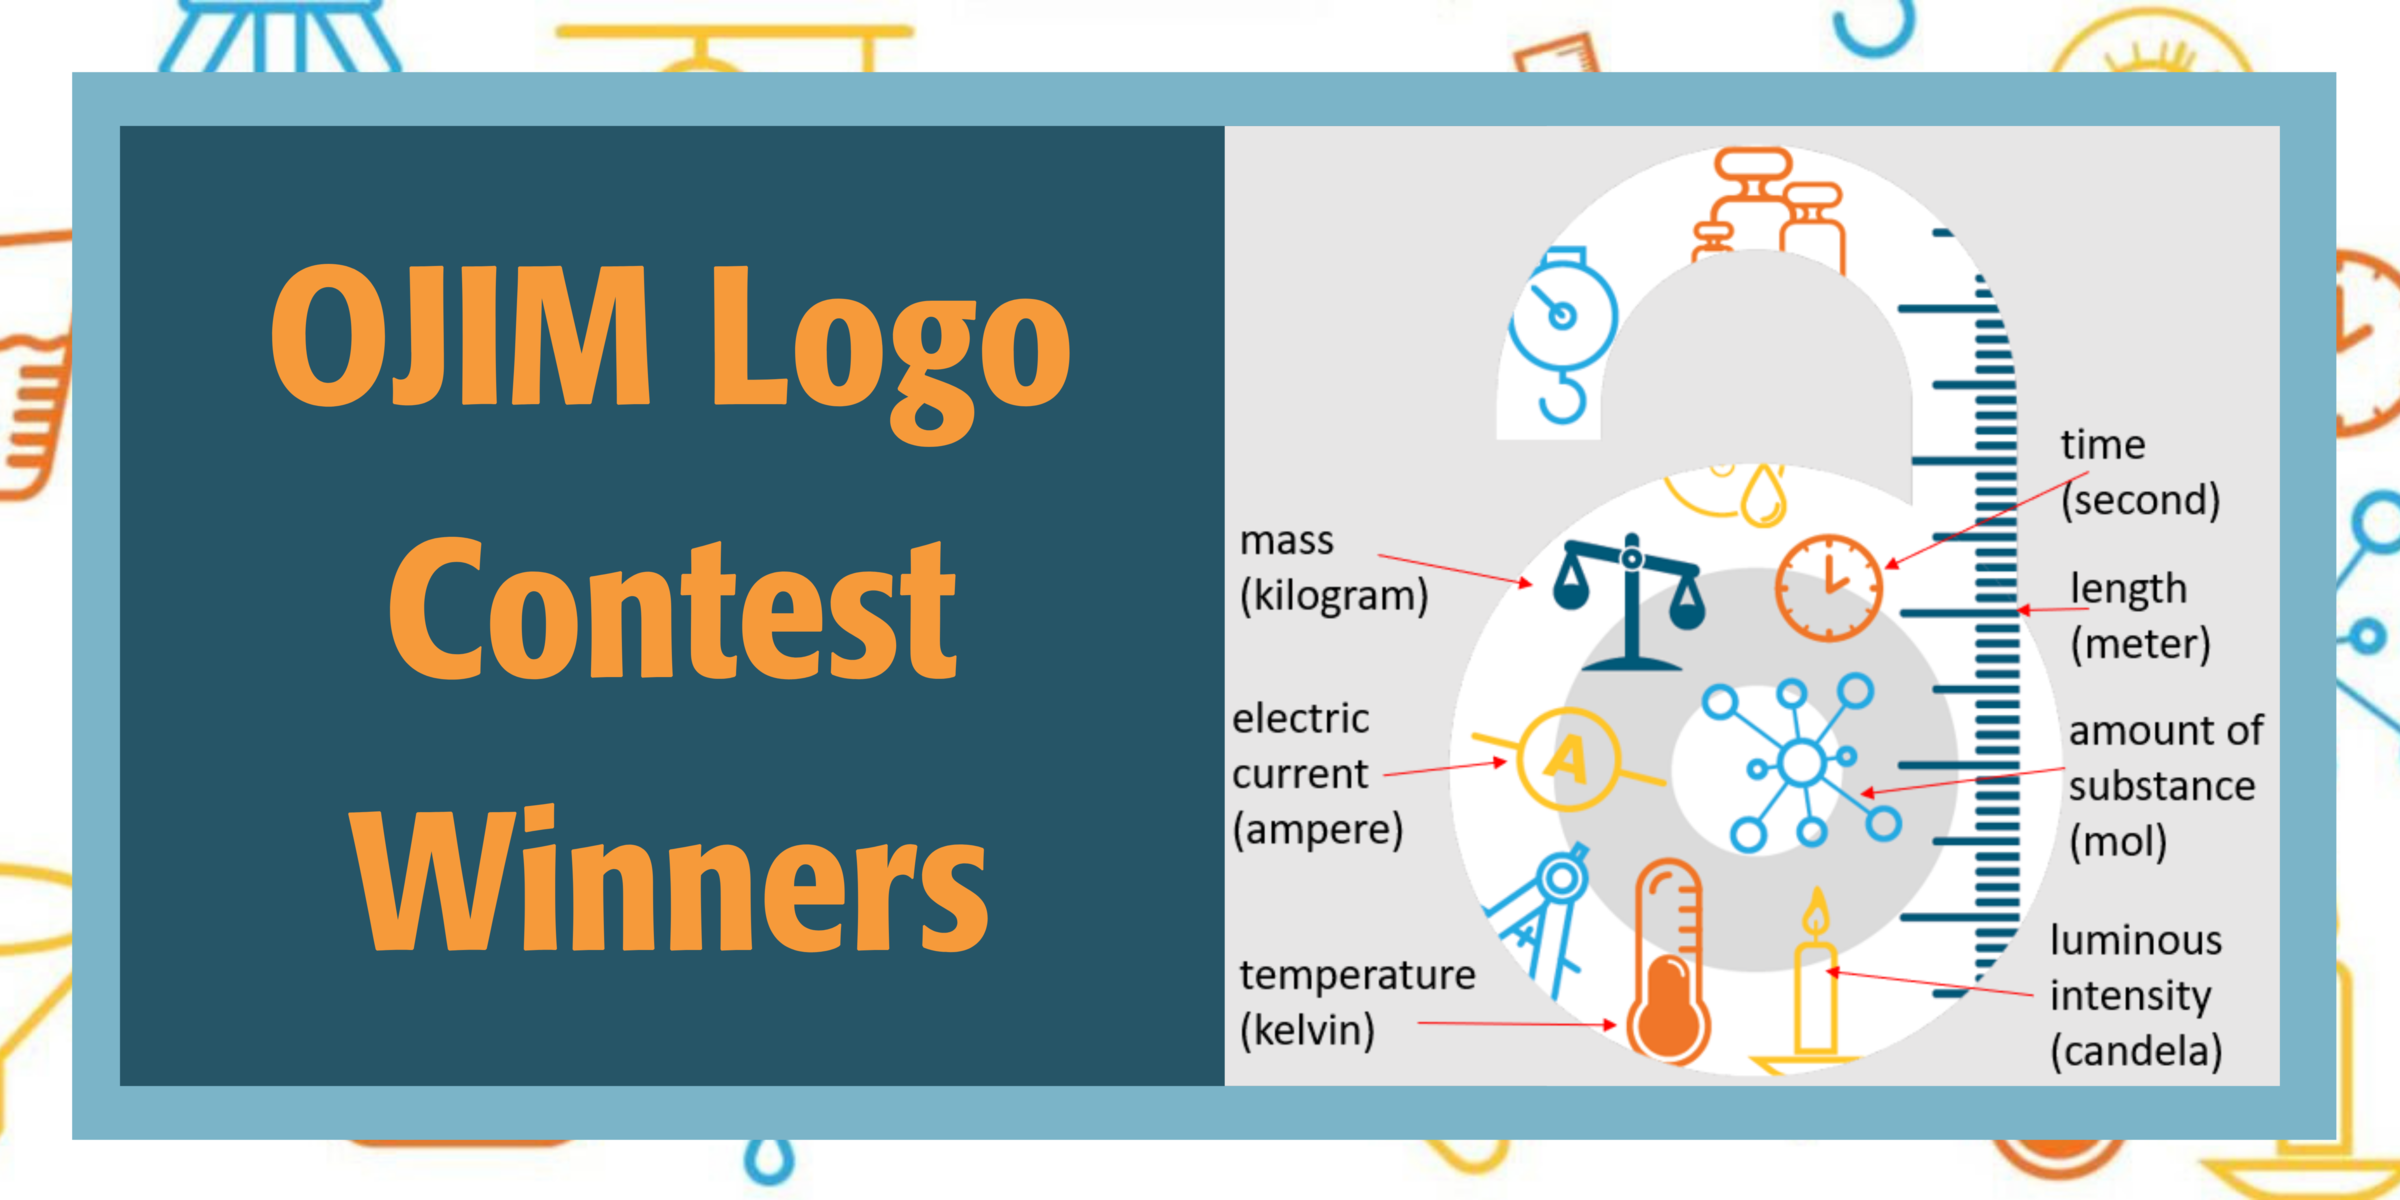 OJIM Logo Contest Winners